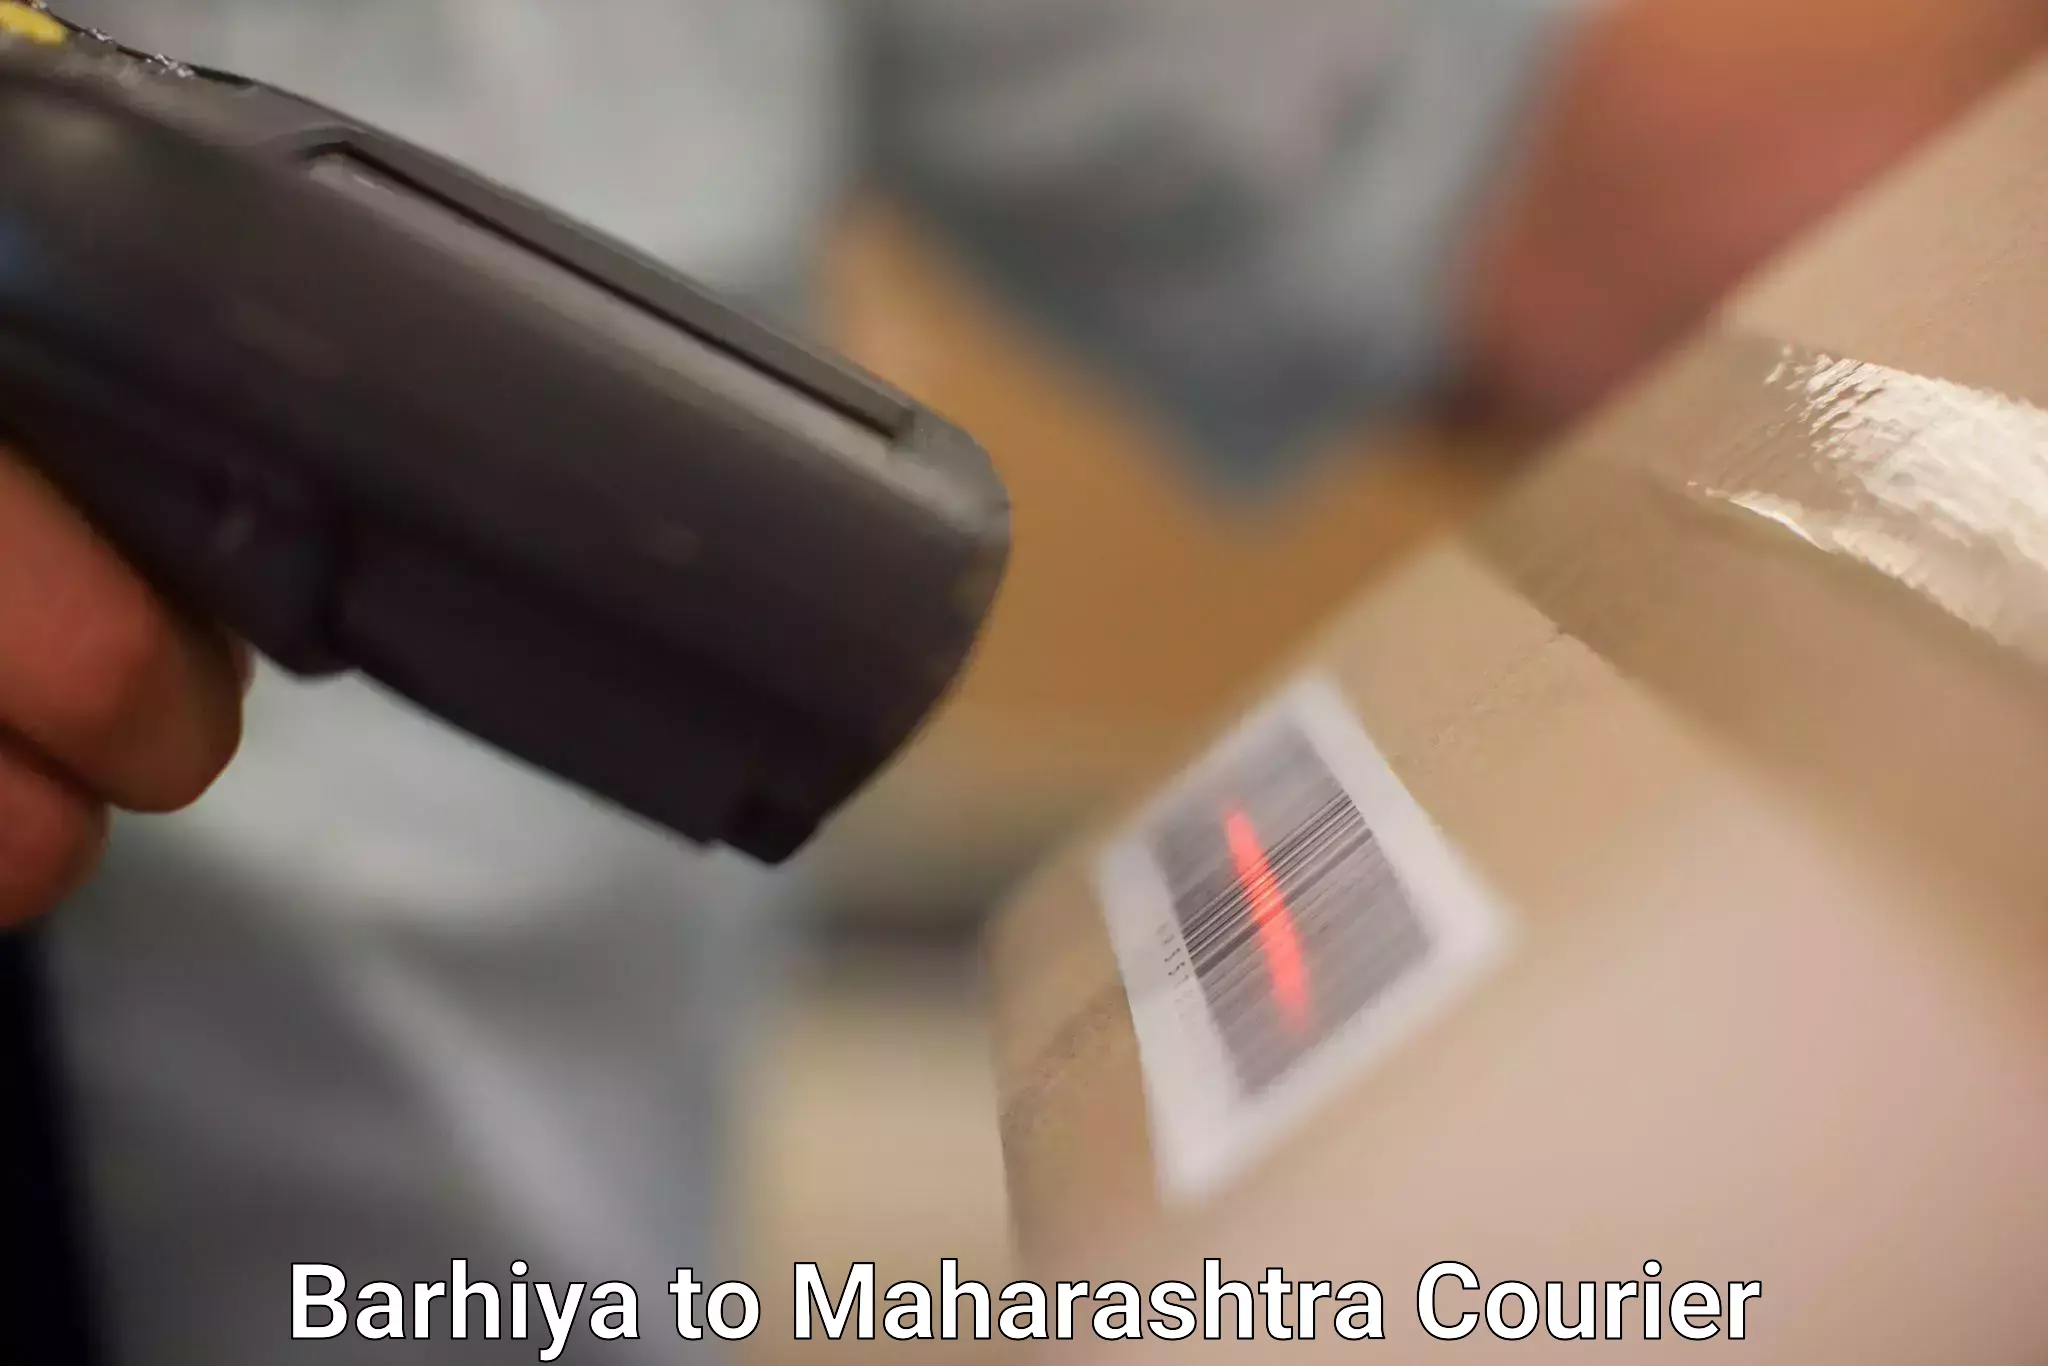 Premium courier solutions in Barhiya to Vasai